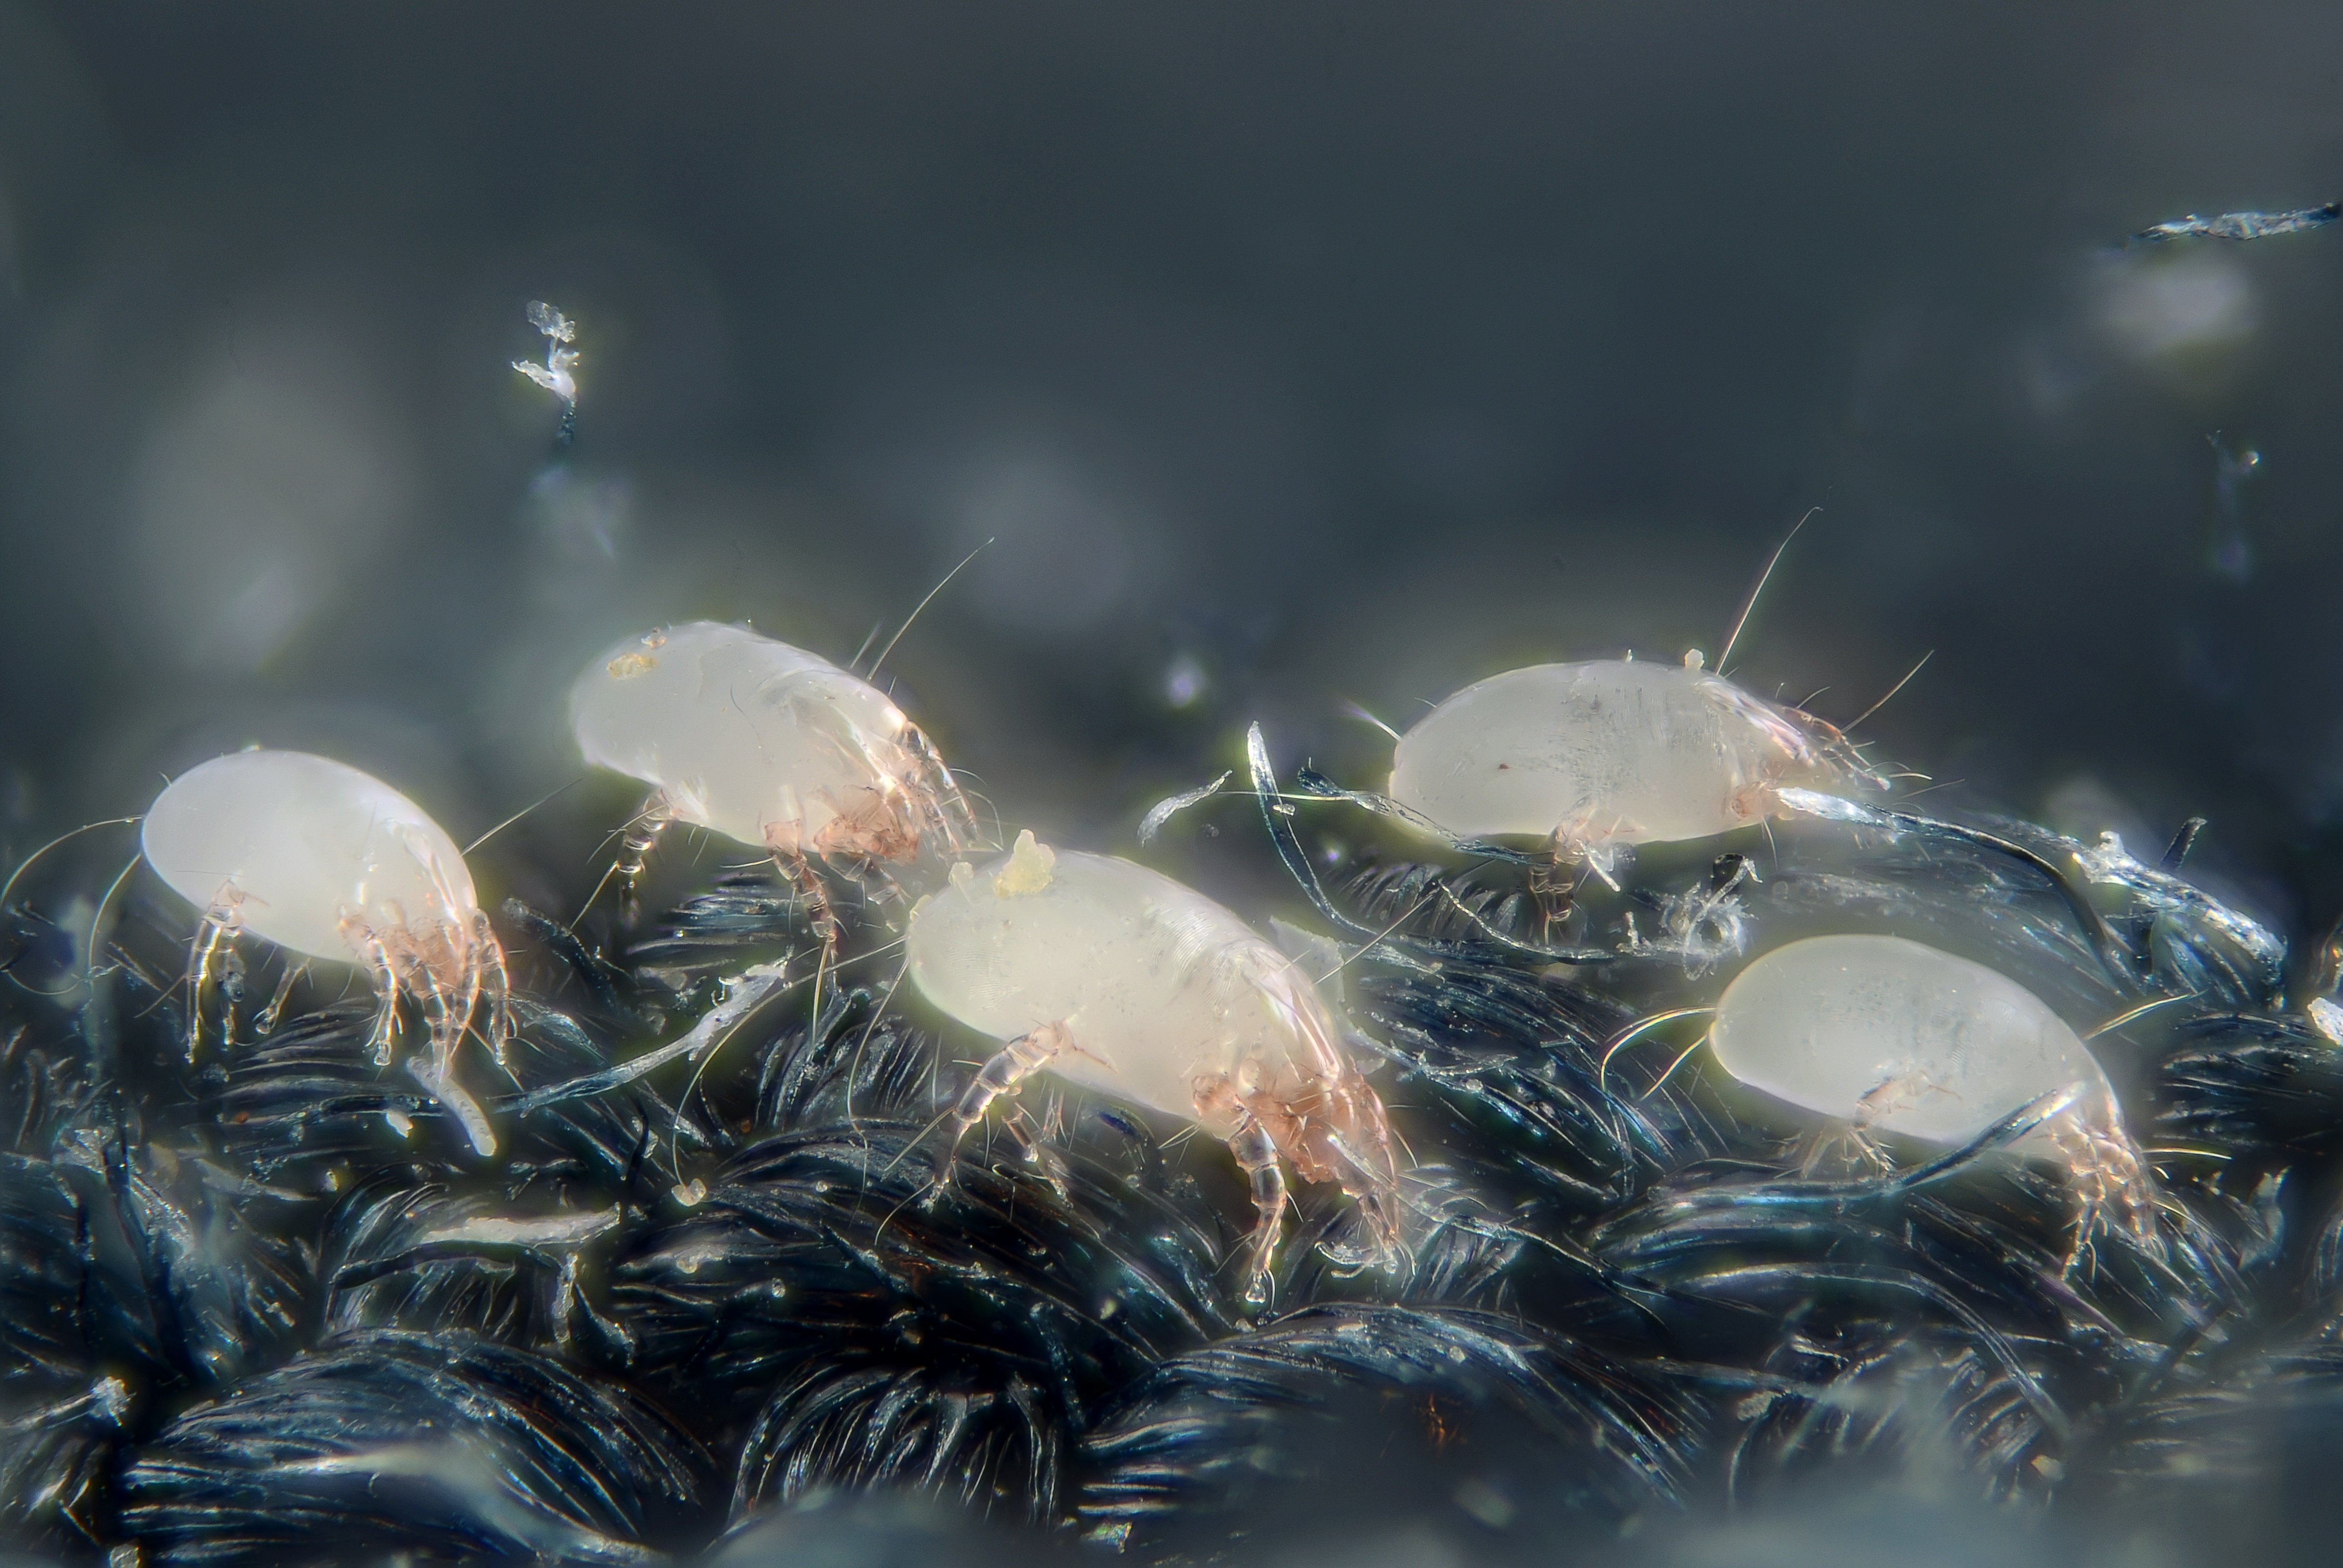 House dust mites